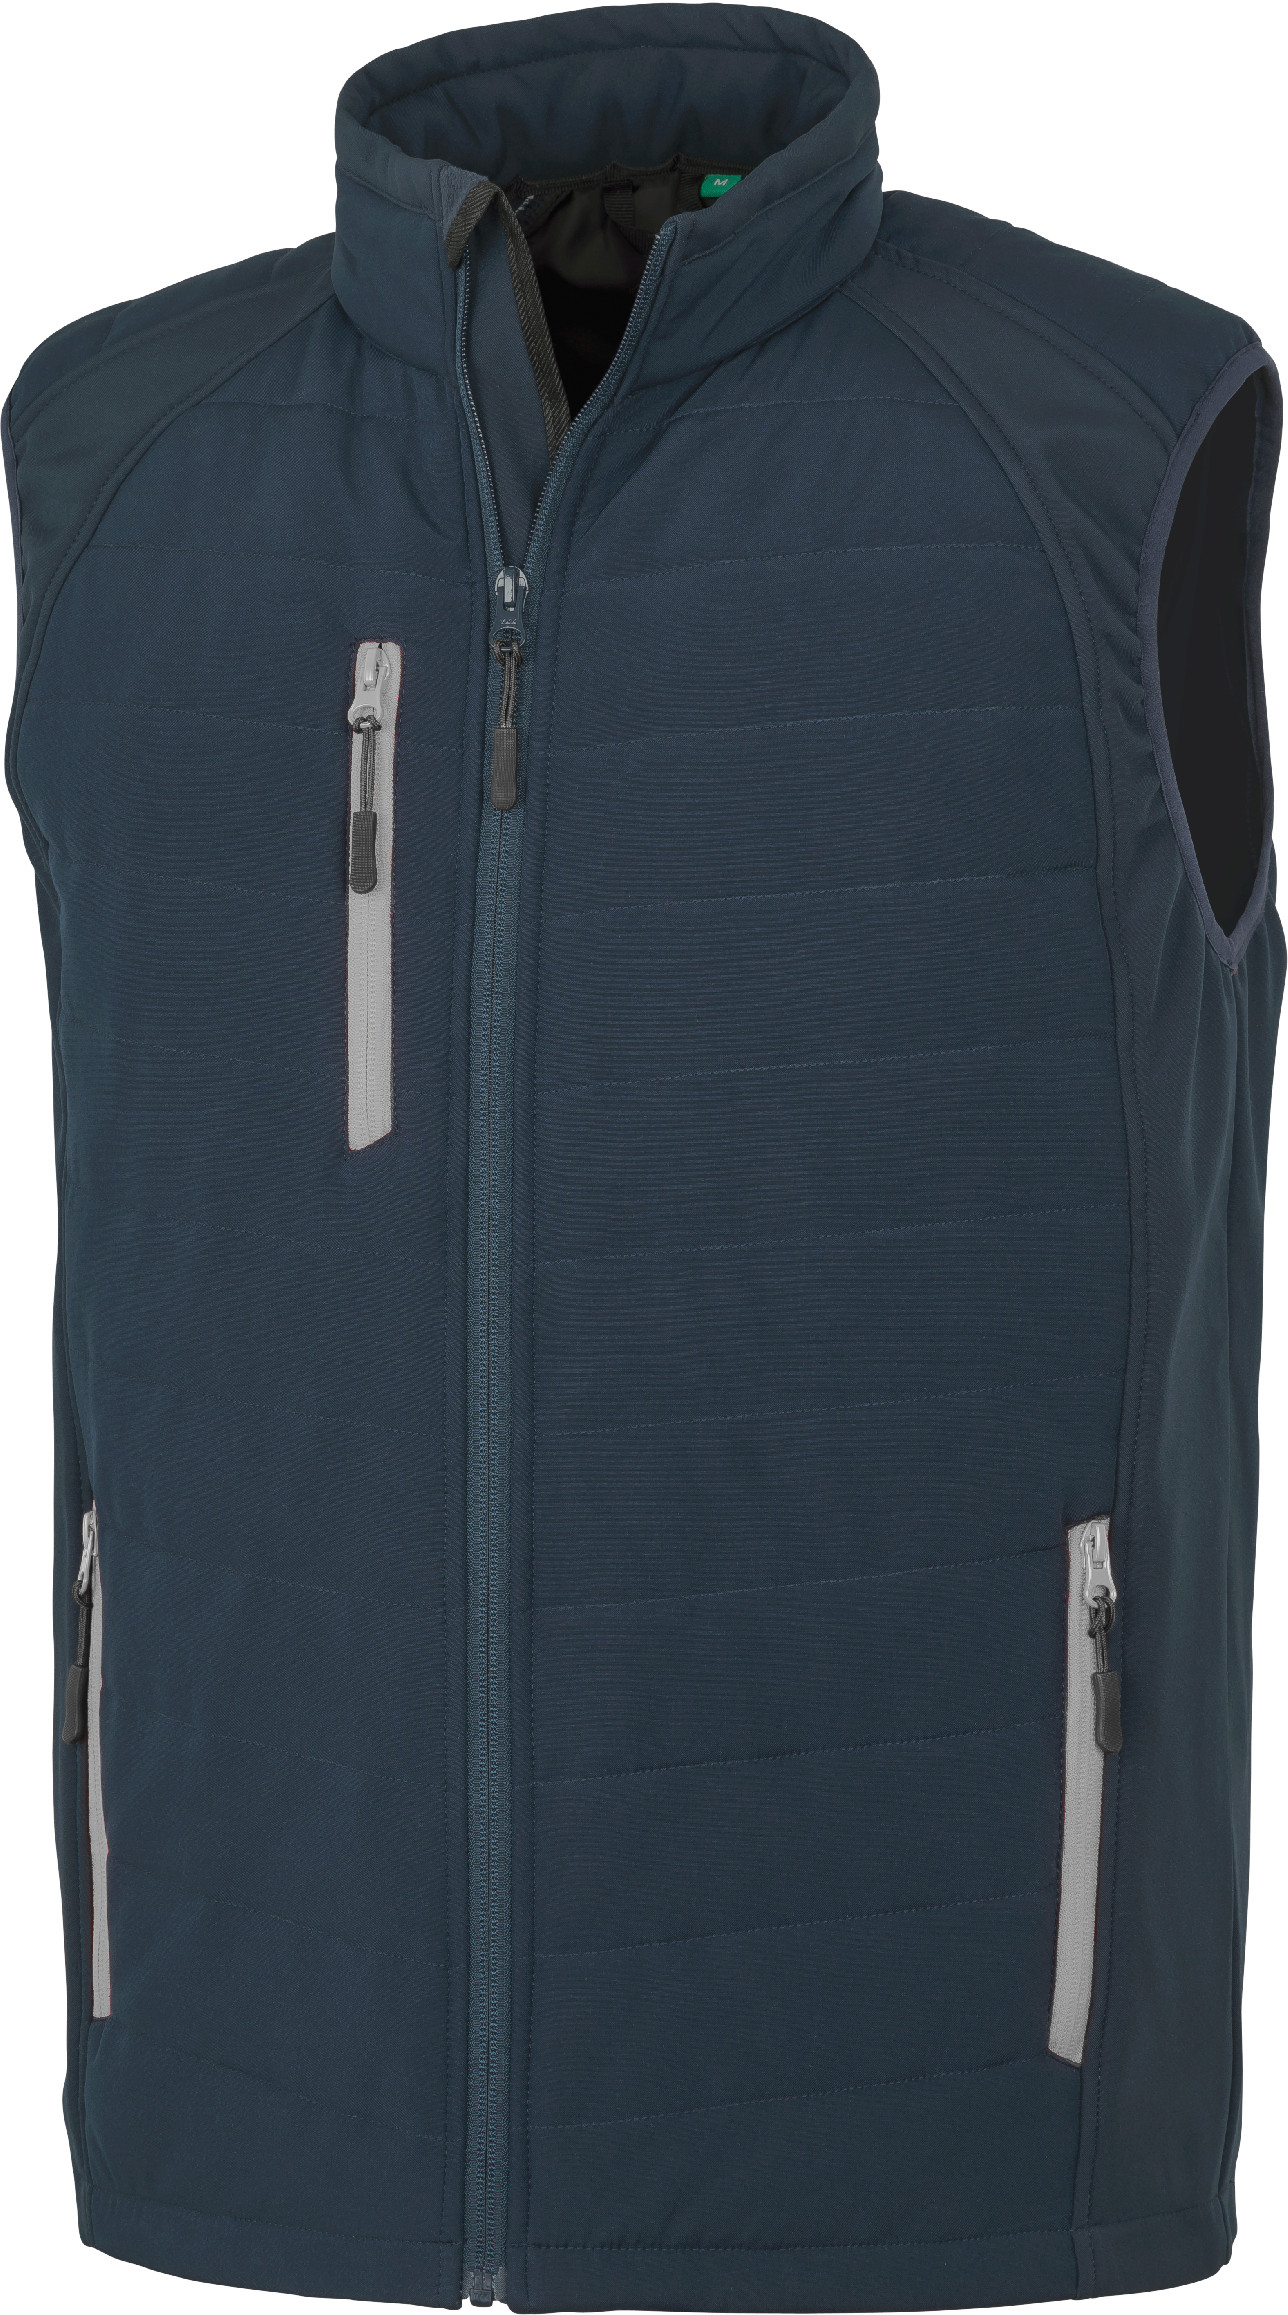 Polstrovaná softshell vesta Compass R238X Barva: námořní modrá-šedá, Velikost: XS